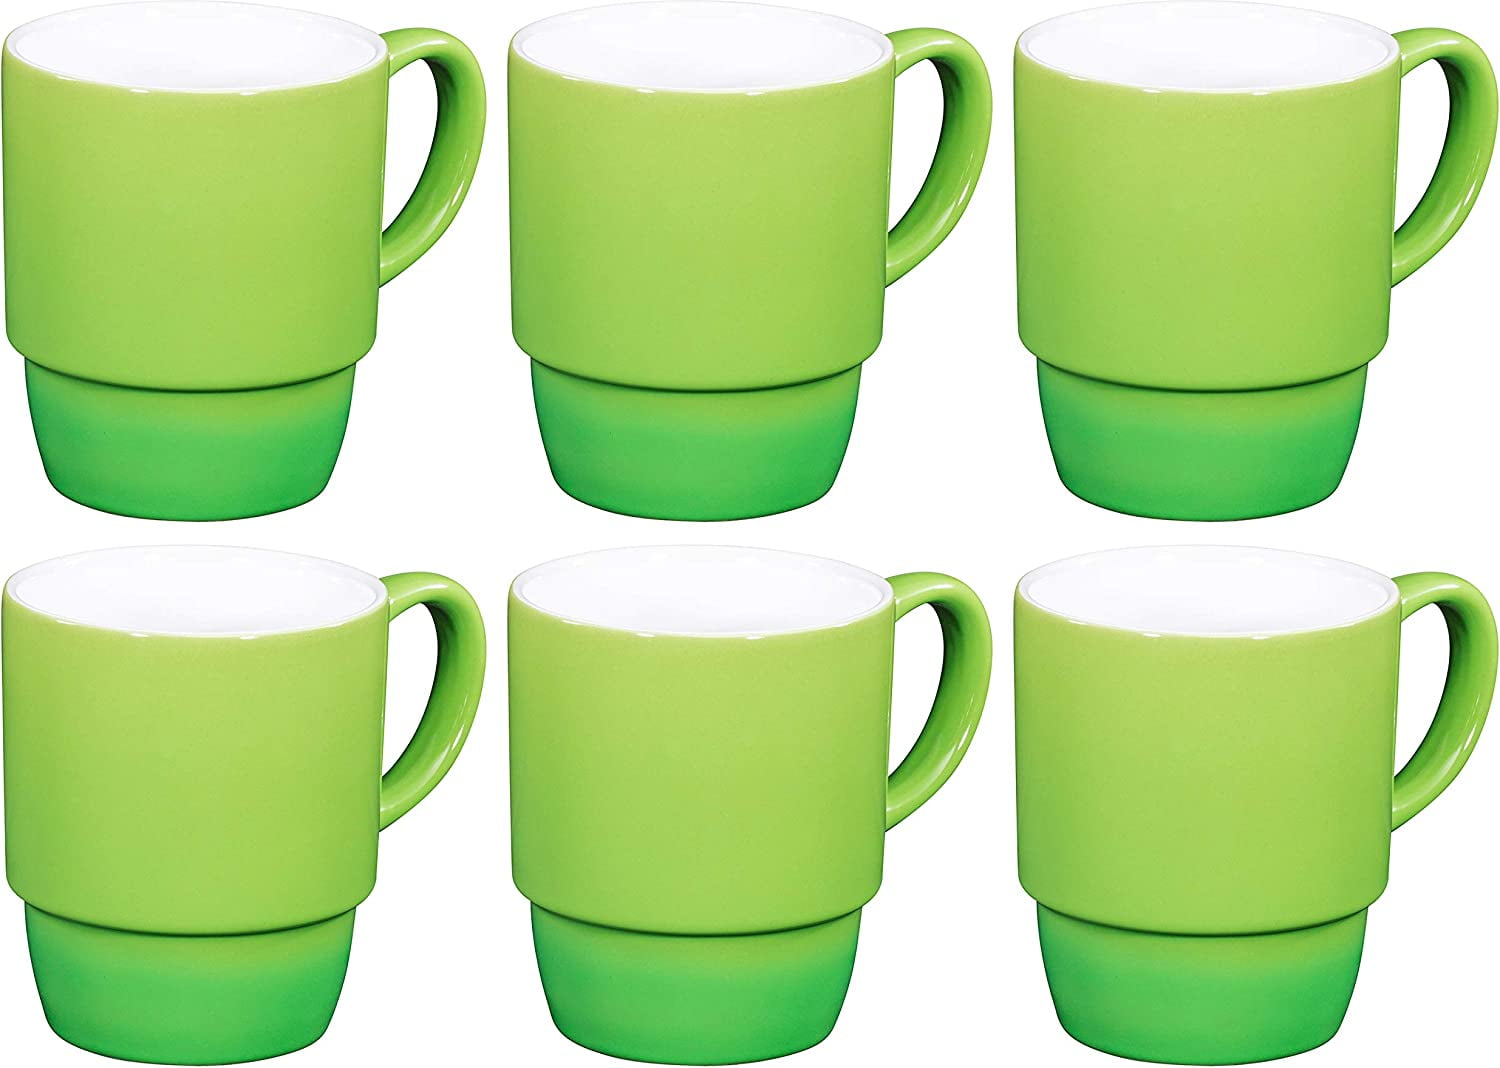 11 oz c-handle coffee mug - Lime Green [WP3419S-366] : Splendids  Dinnerware, Wholesale Dinnerware and Glassware for Restaurant and Home